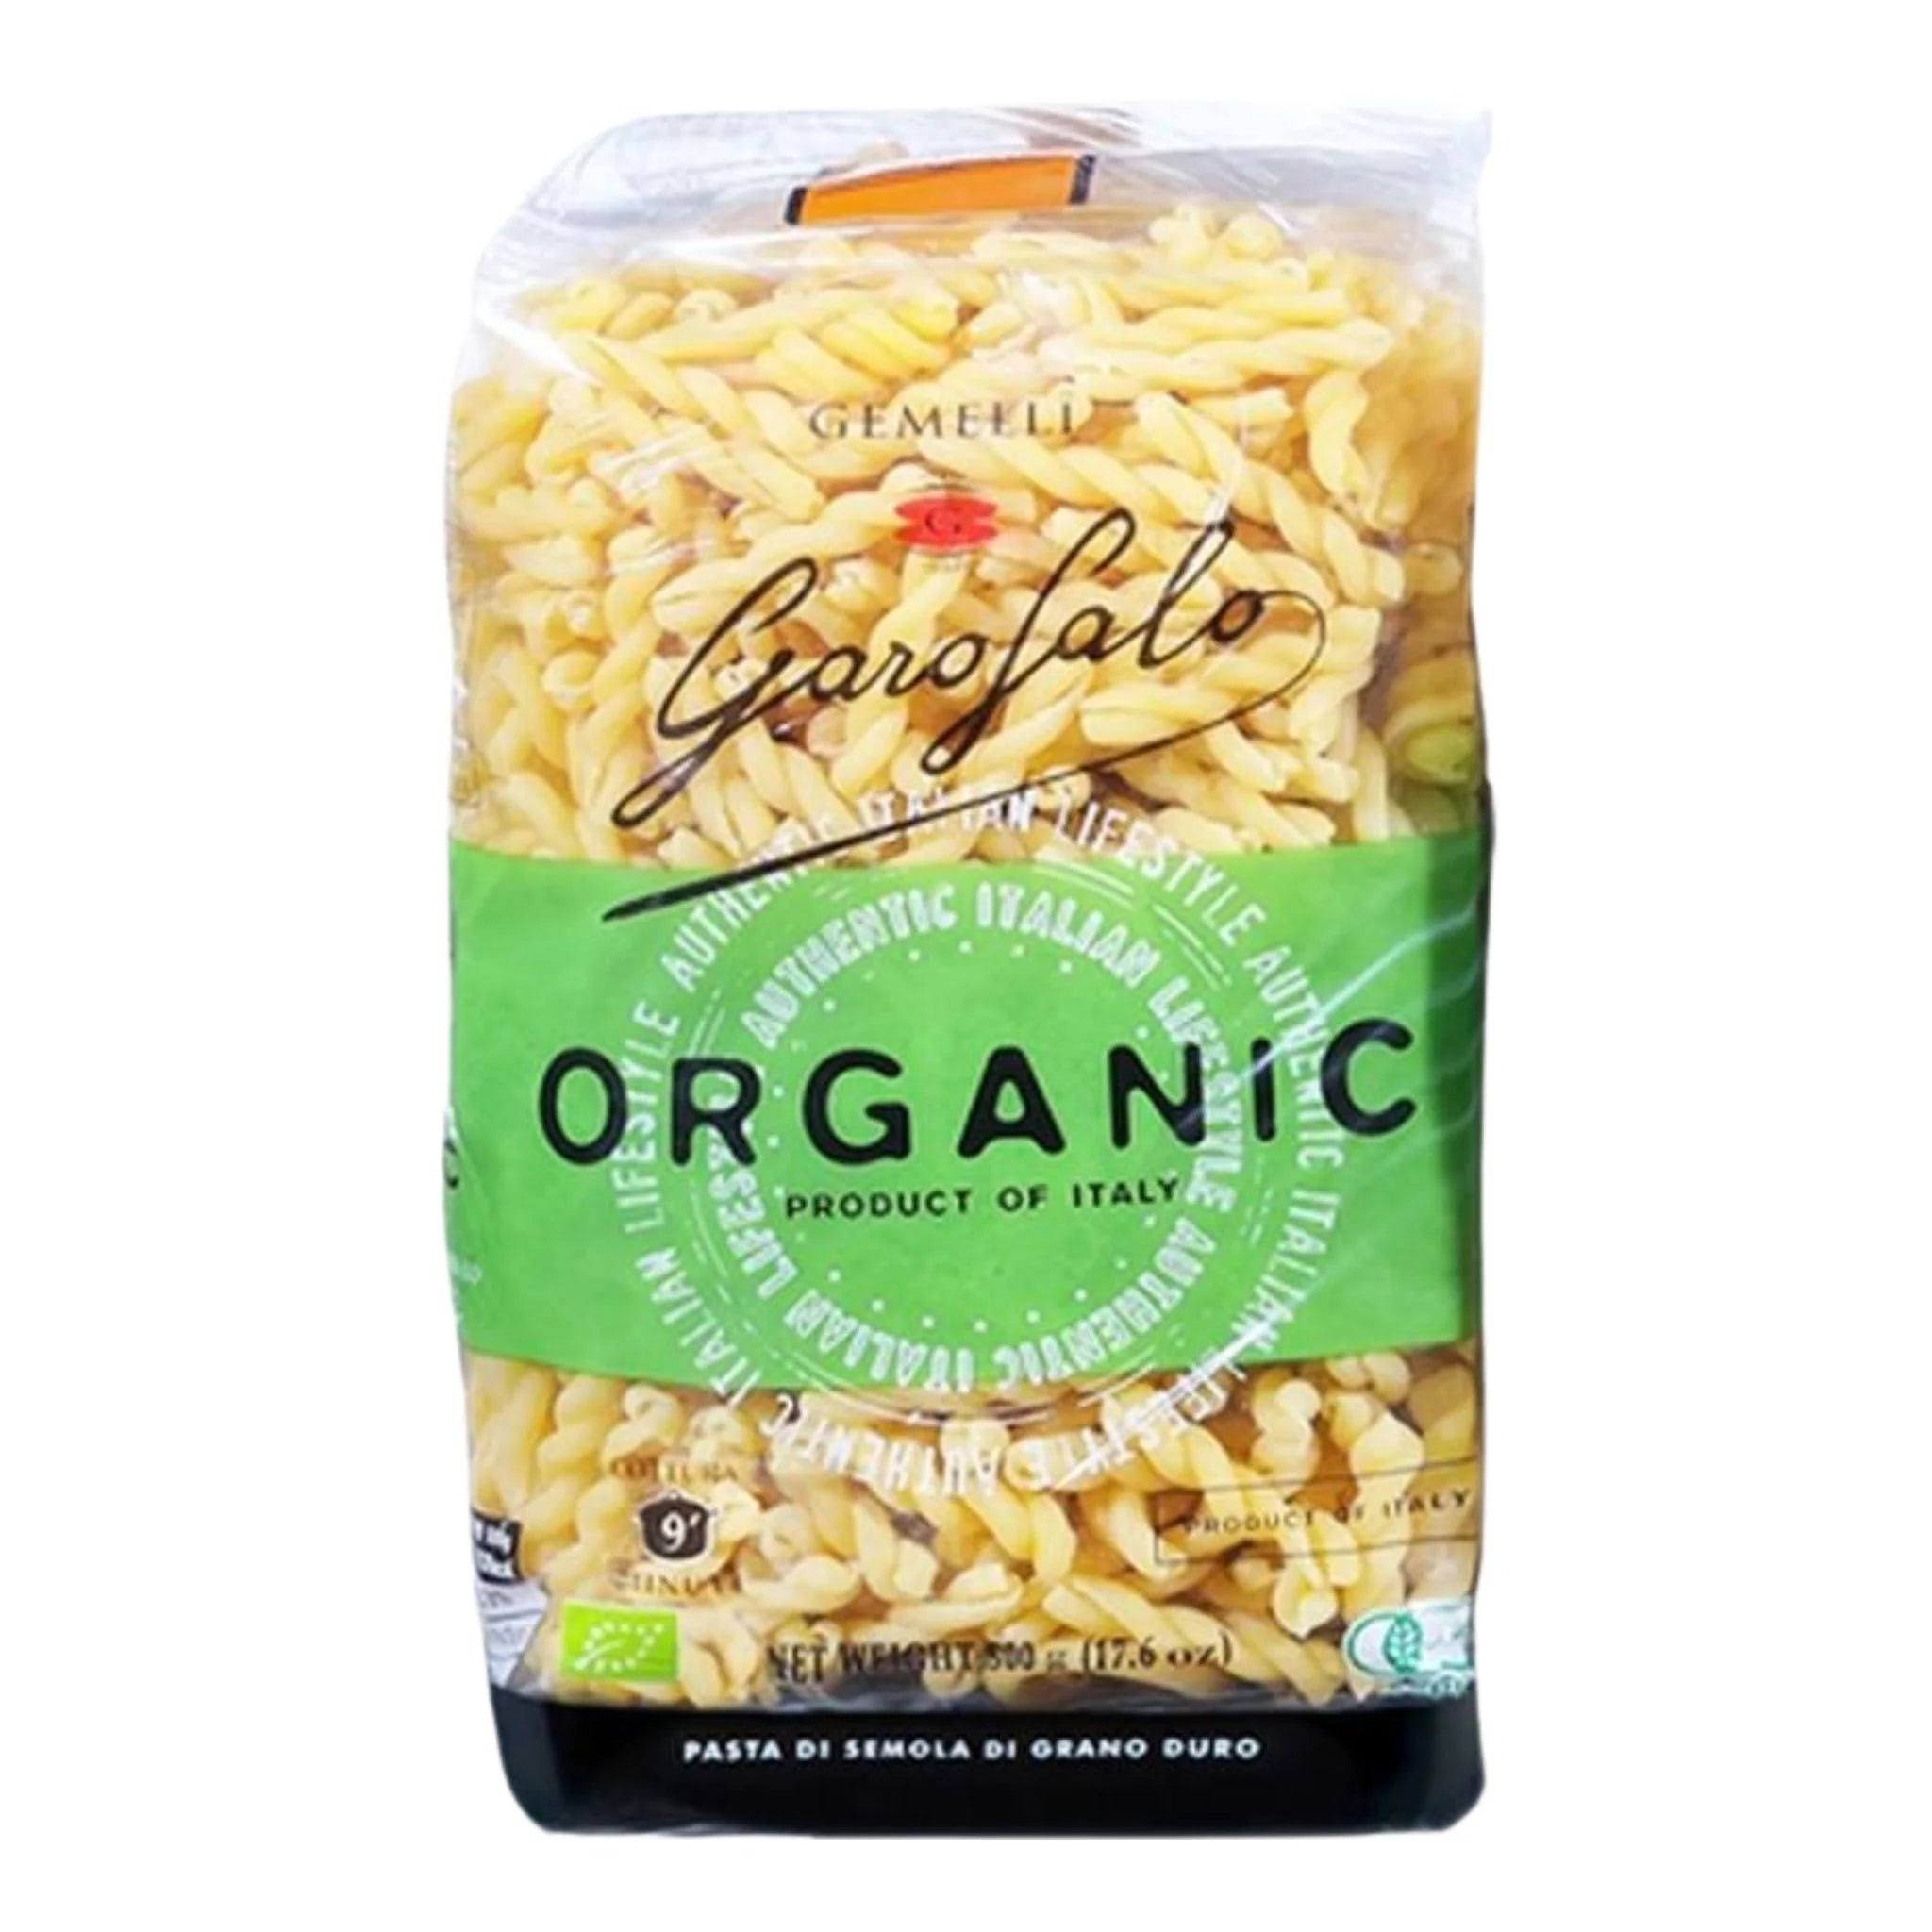 Garo Falo Organic 100% Wheat Pasta - Gemelli, 500g